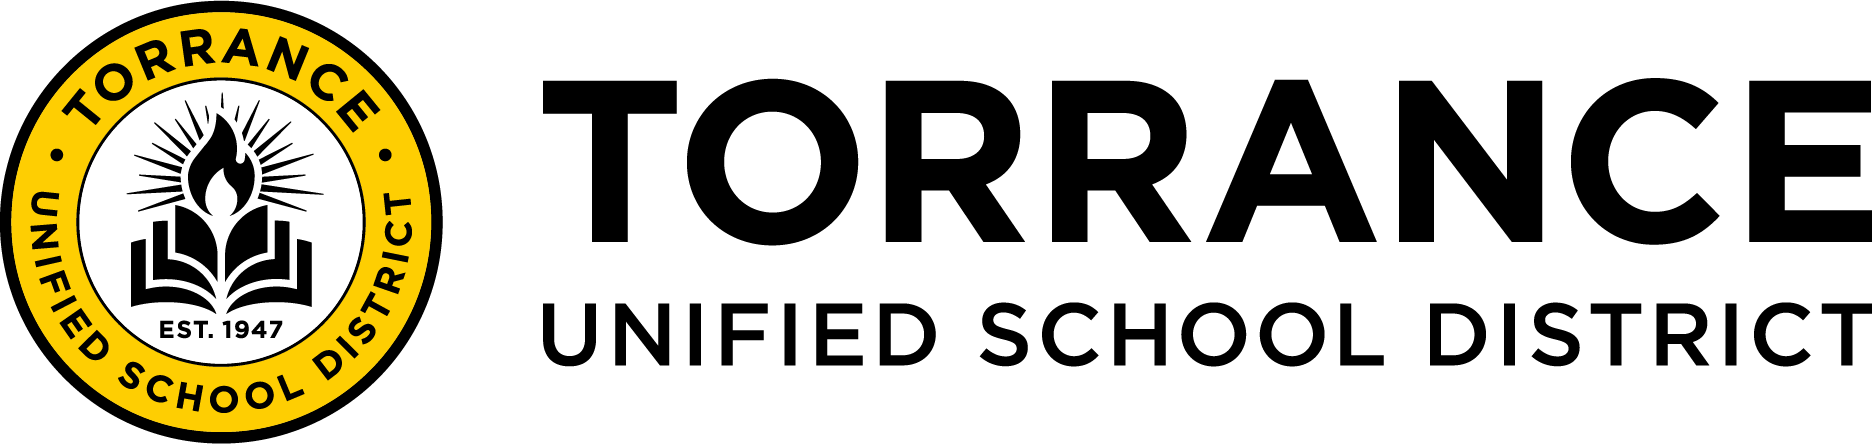 Torrance Unified School District Logo